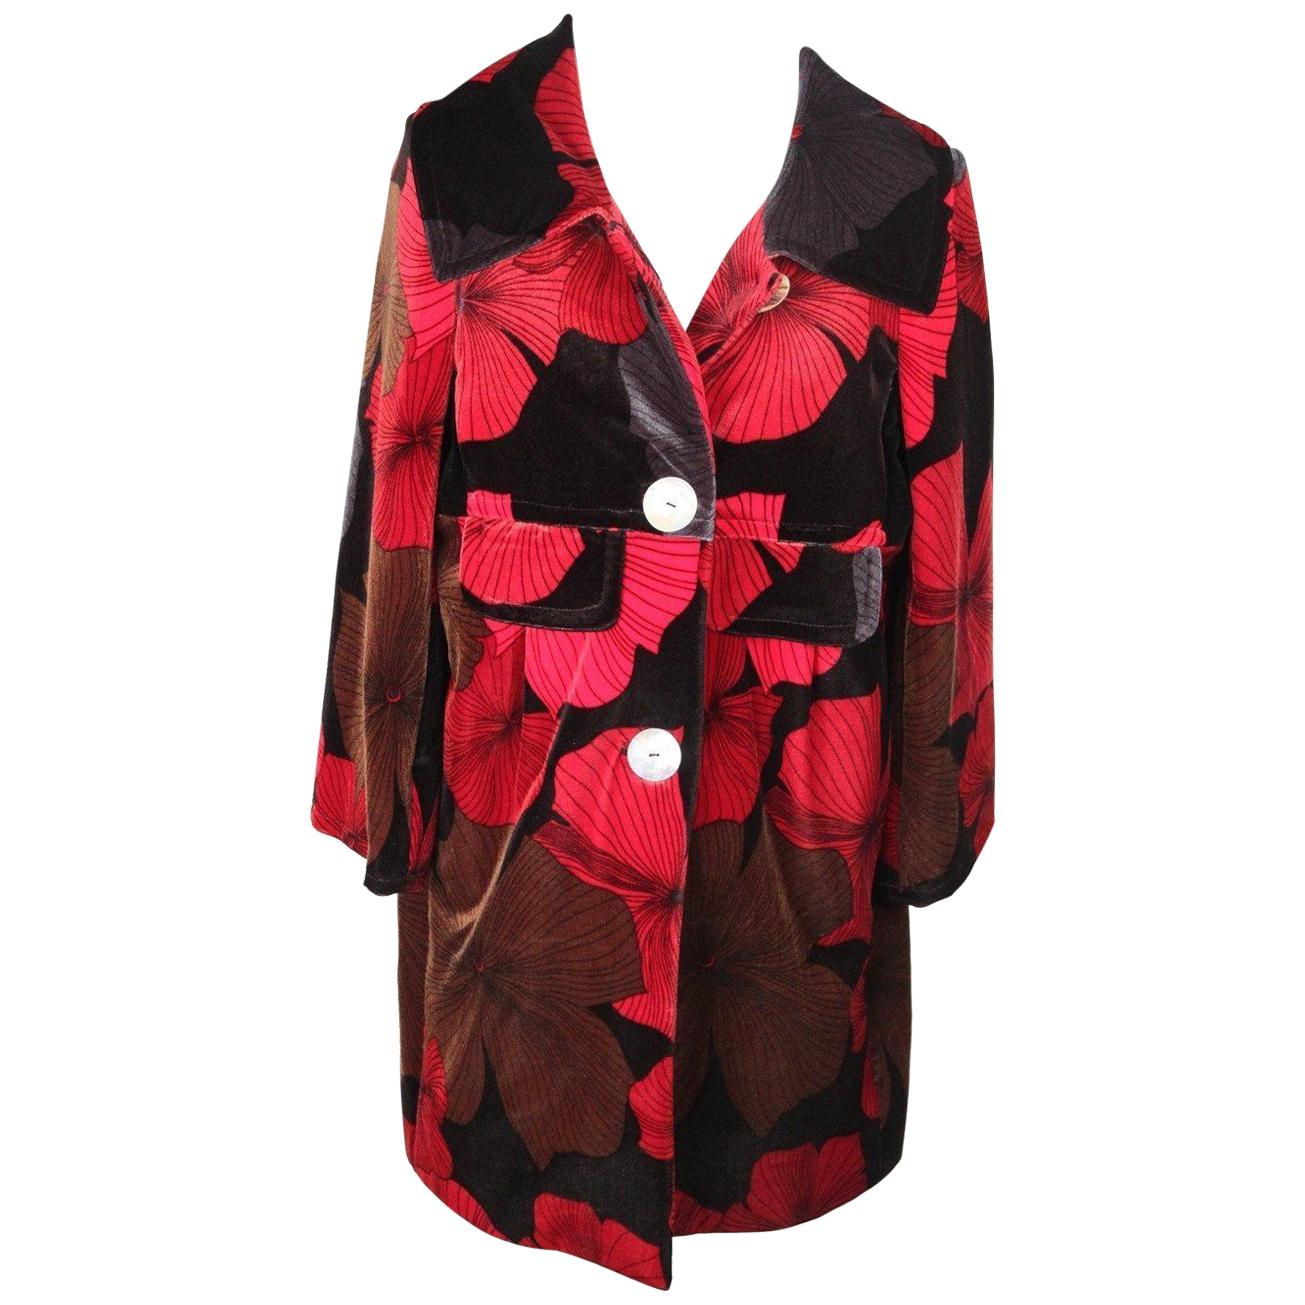 PER NON DORMIRE Red & Black Floral Pattern VELVET COAT Size 40